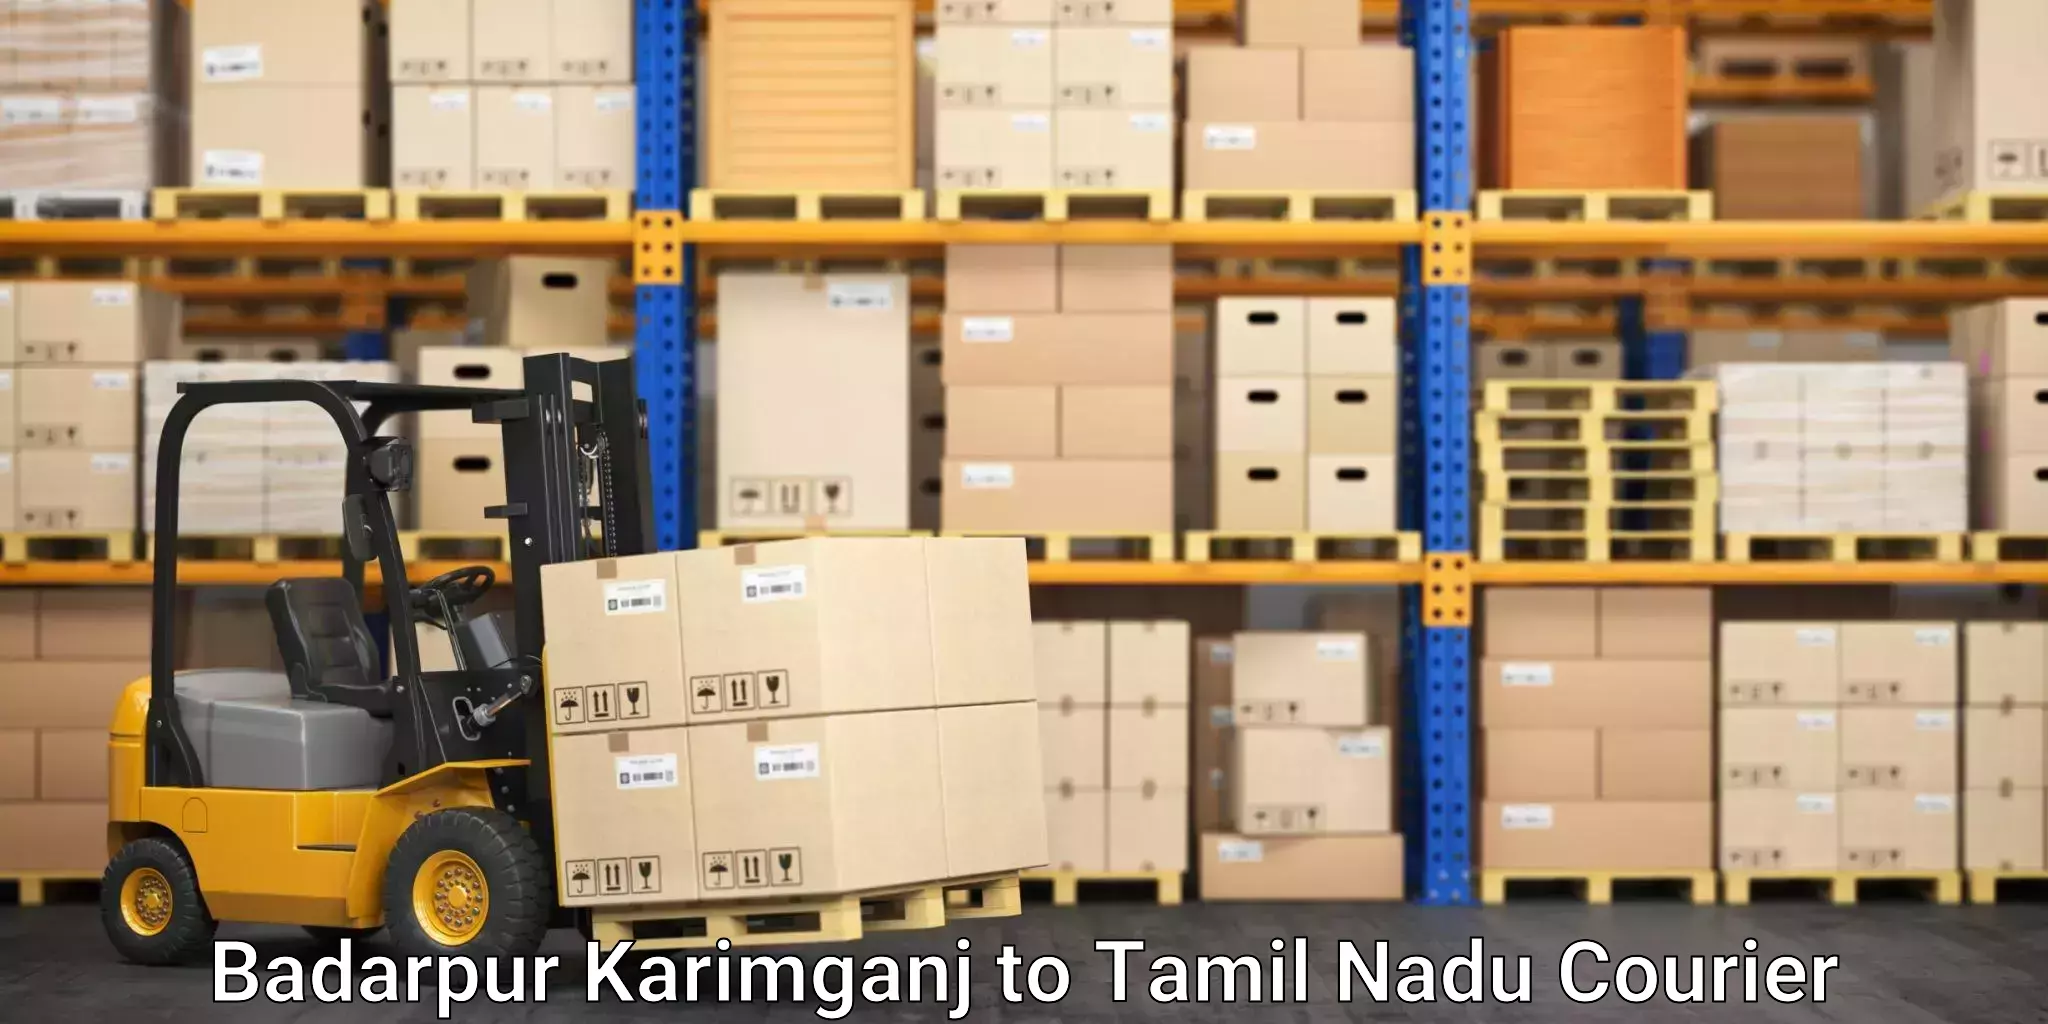 Enhanced tracking features Badarpur Karimganj to Tamil Nadu